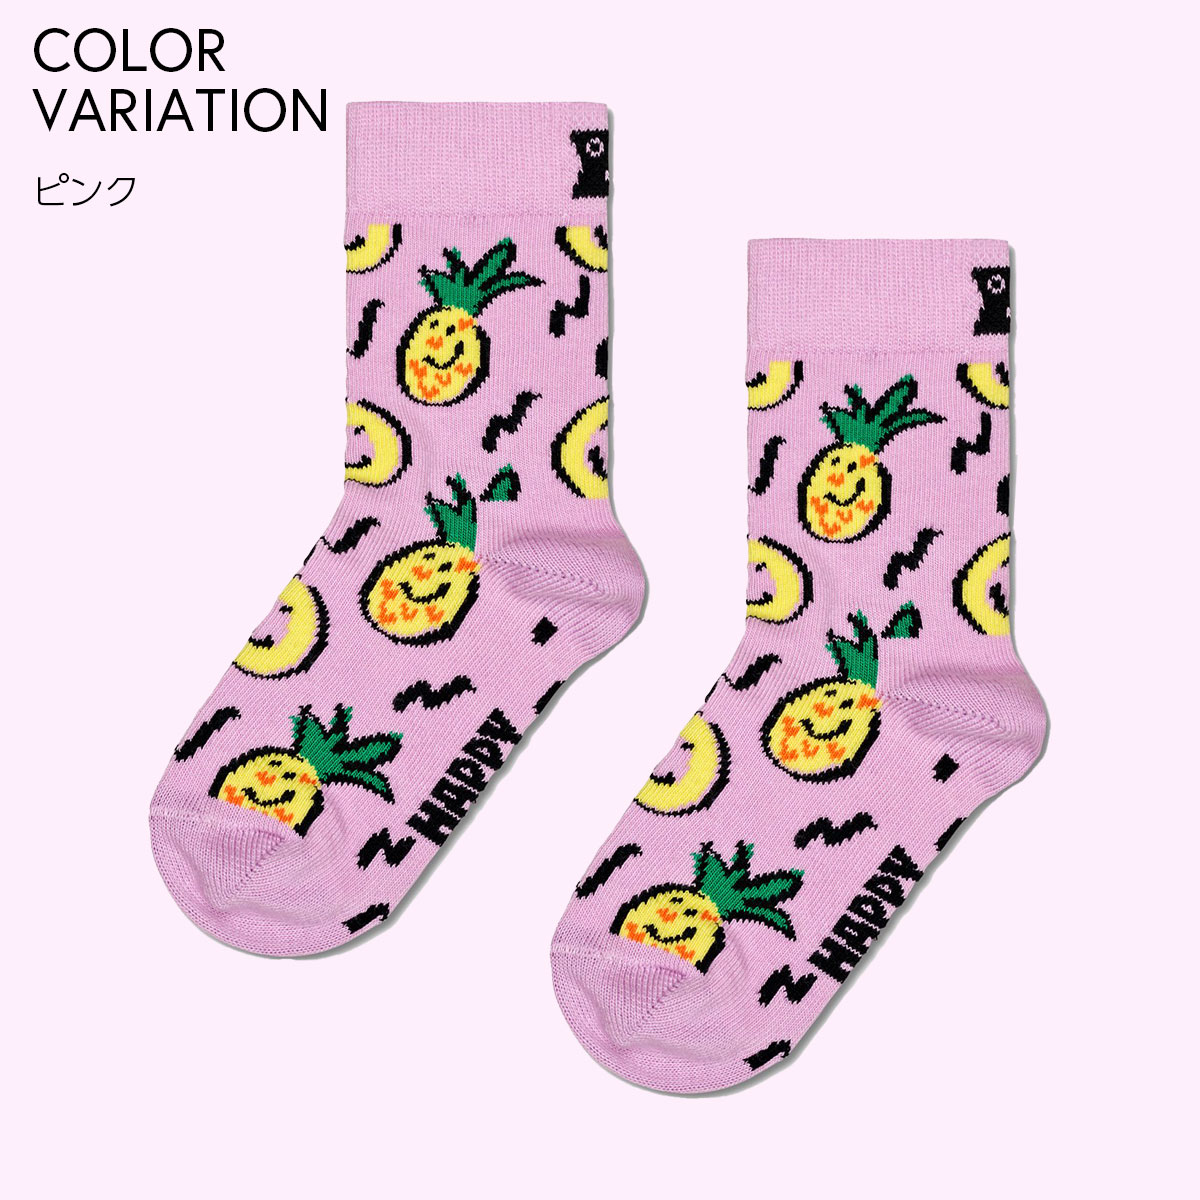 【24SS】Happy Socks ハッピーソックス Kids Pineapple ( パイナップル ) 子供 クルー丈 綿混 ソックス KIDS ジュニア キッズ 12240005